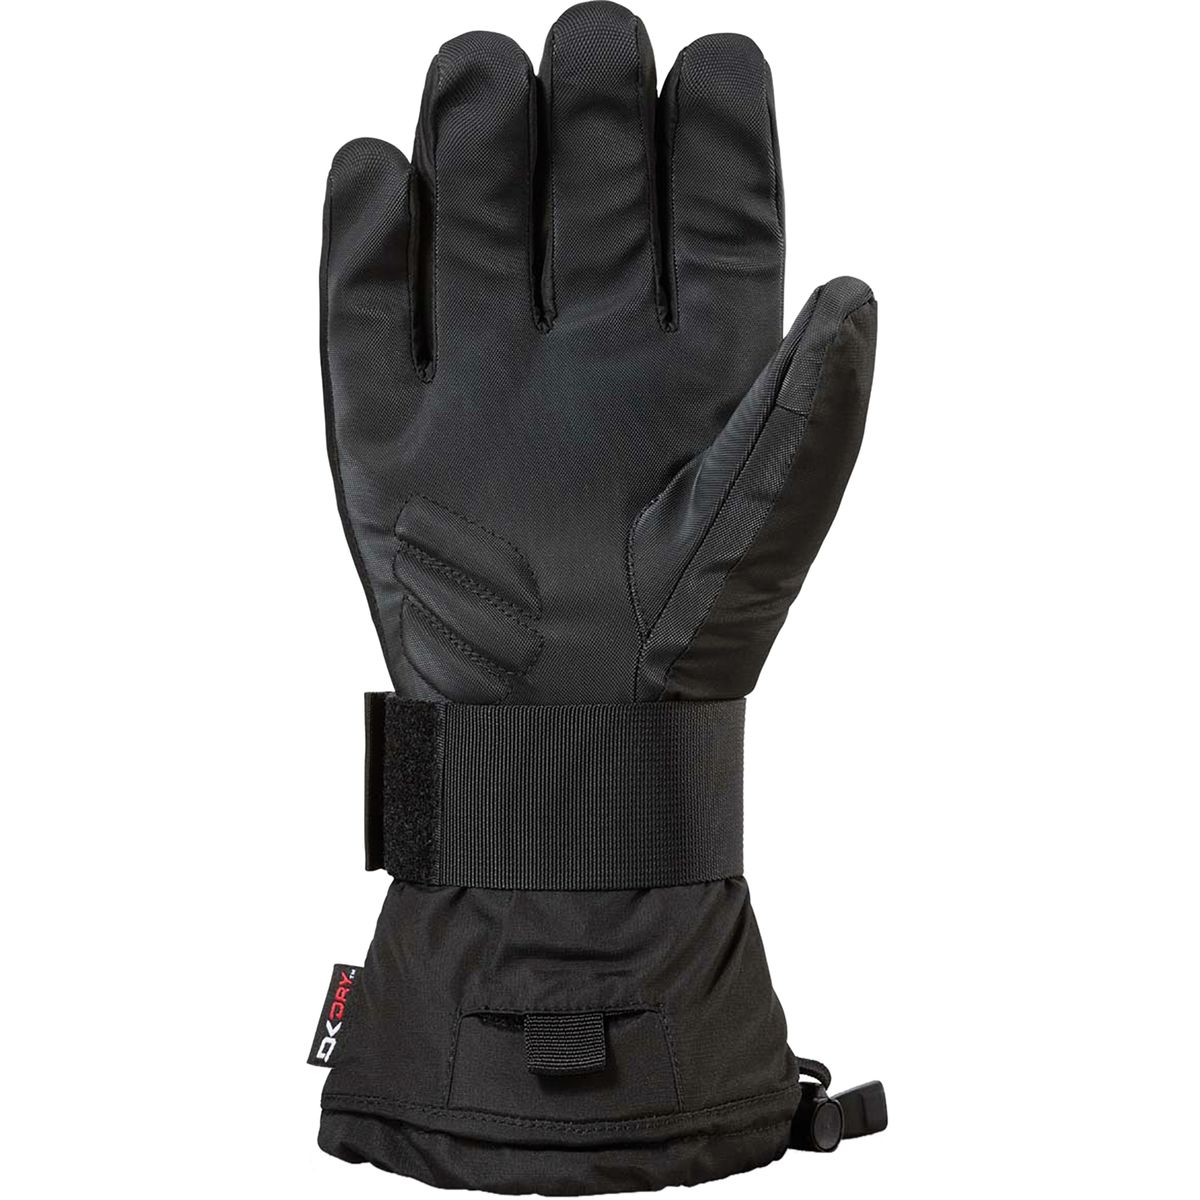 DAKINE Wristguard Glove - Men's | eBay